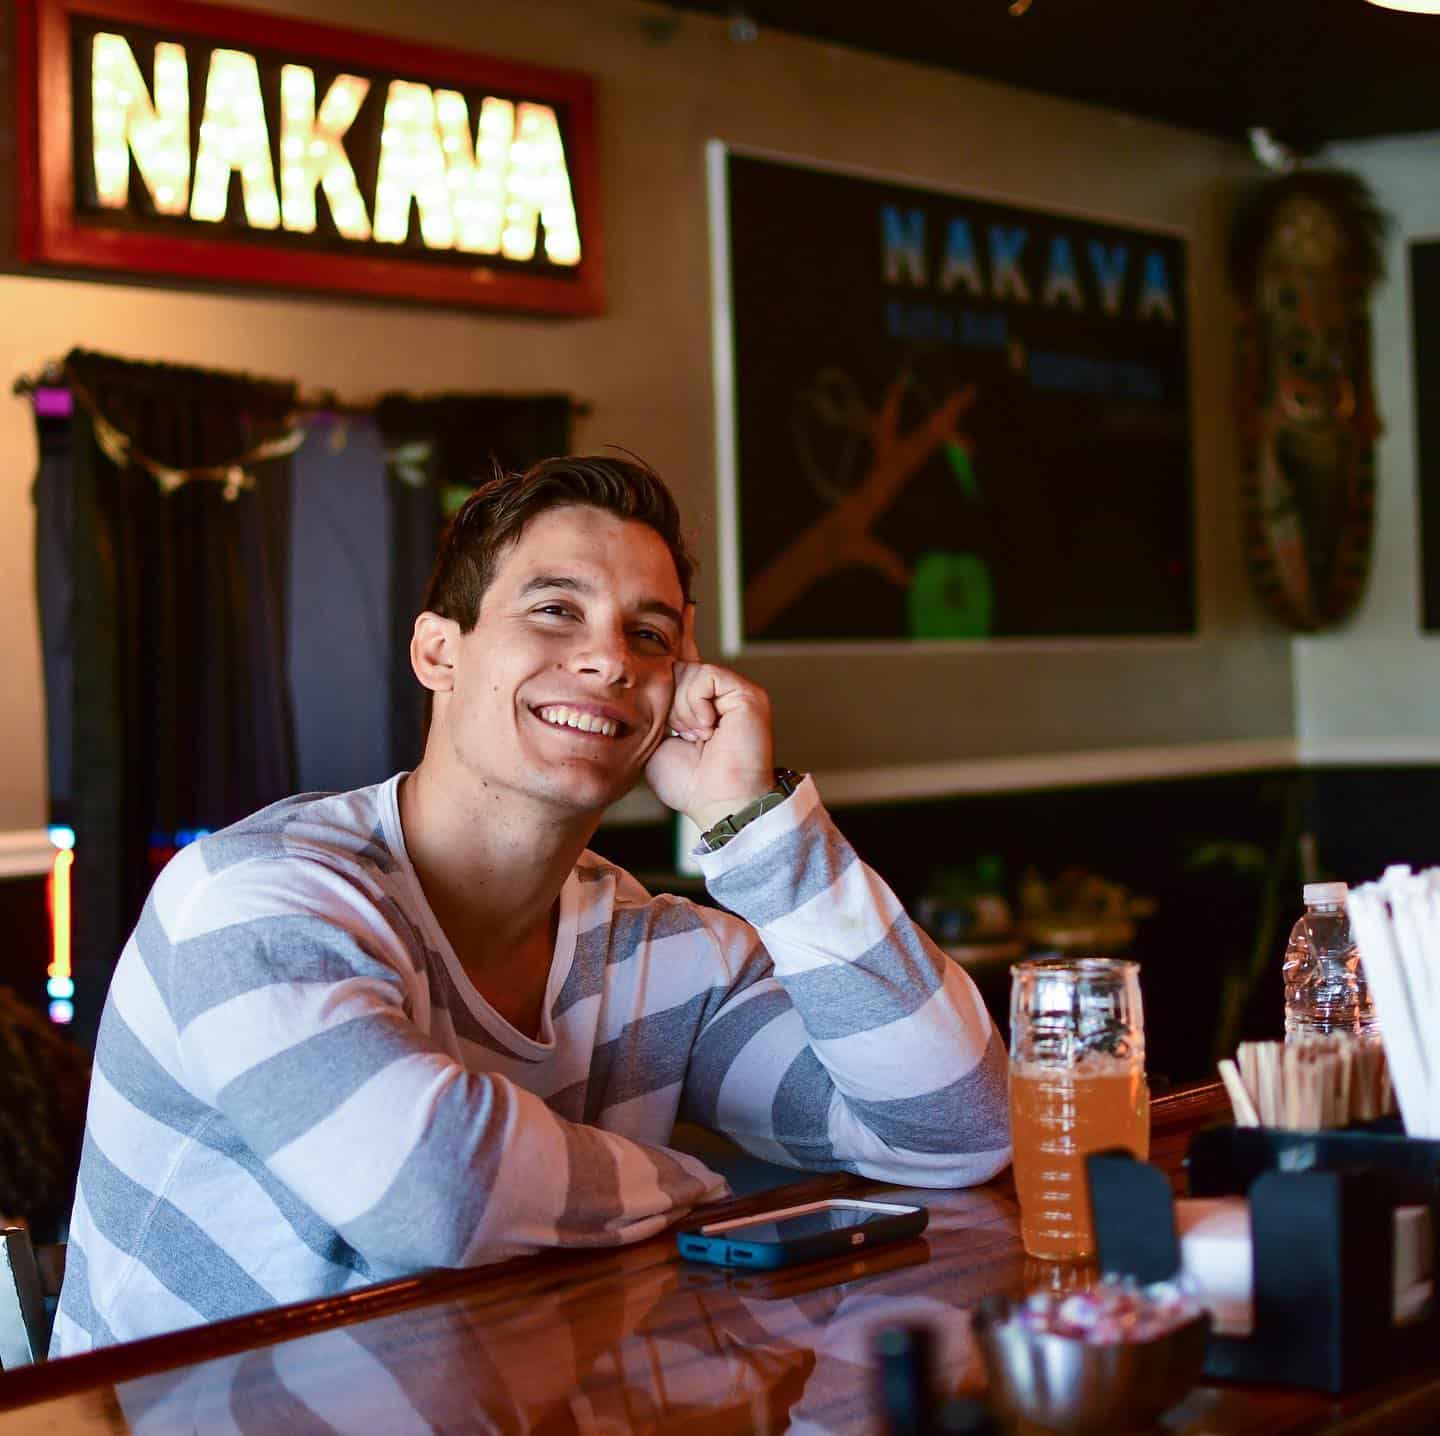 Drinking Kava in the USA - Nakava Bar